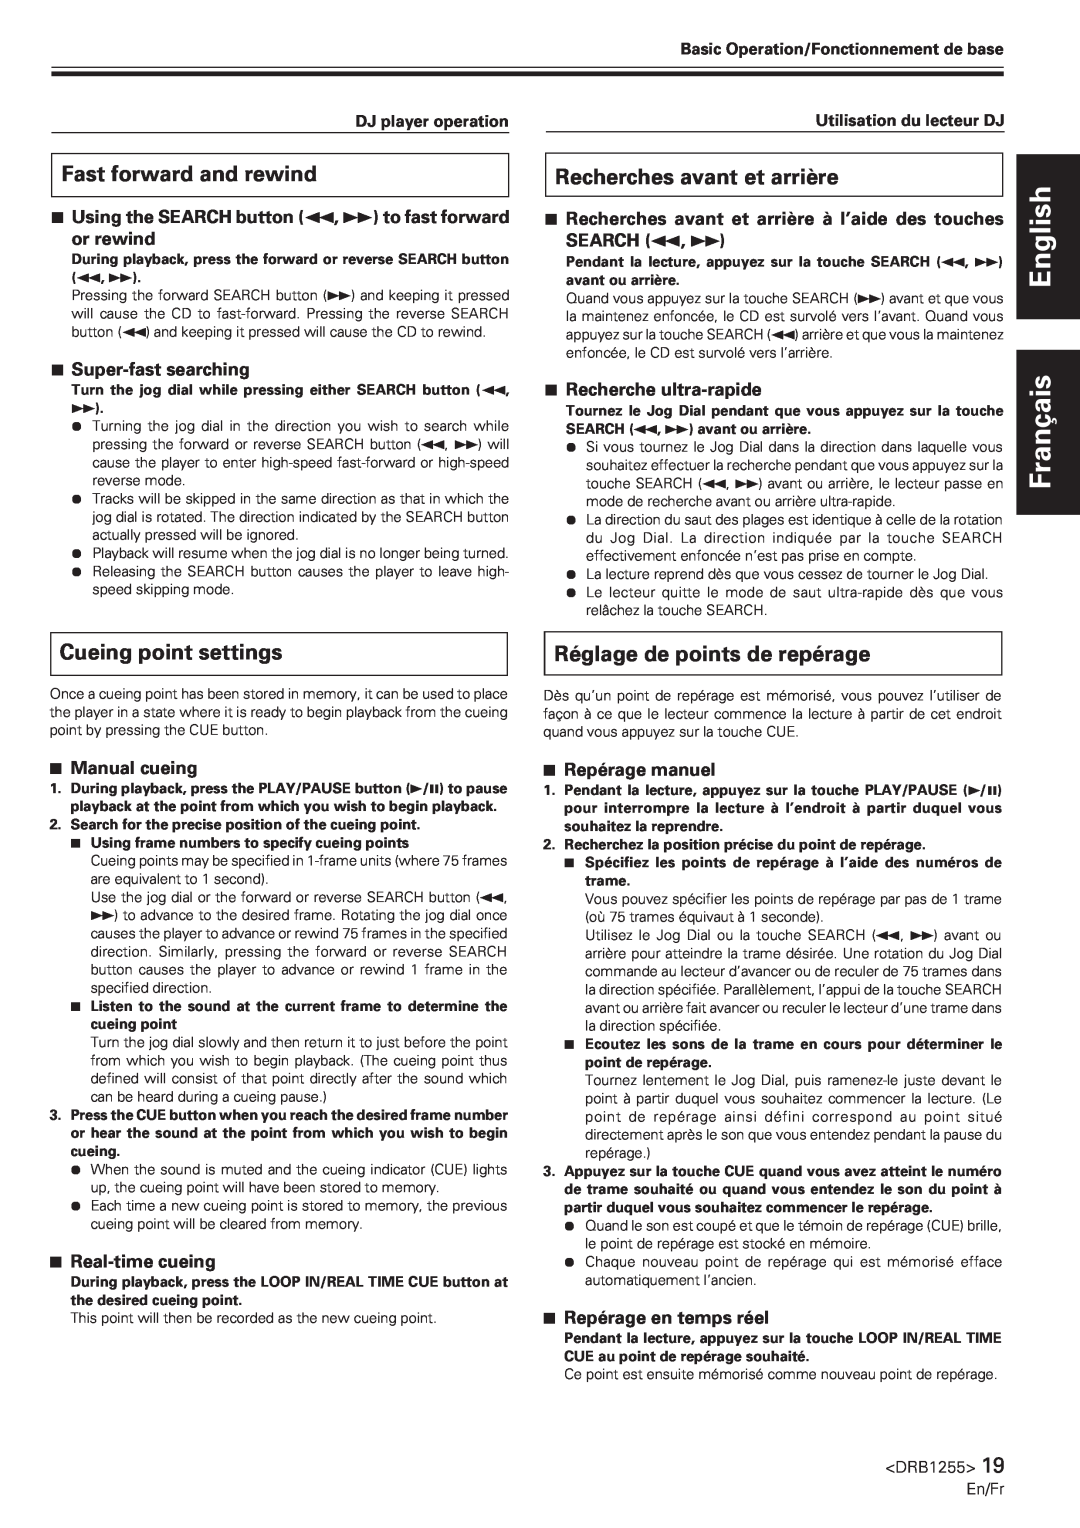 Pioneer CMX-5000 manual Fast forward and rewind, Recherches avant et arrière, Cueing point settings, English, Français 